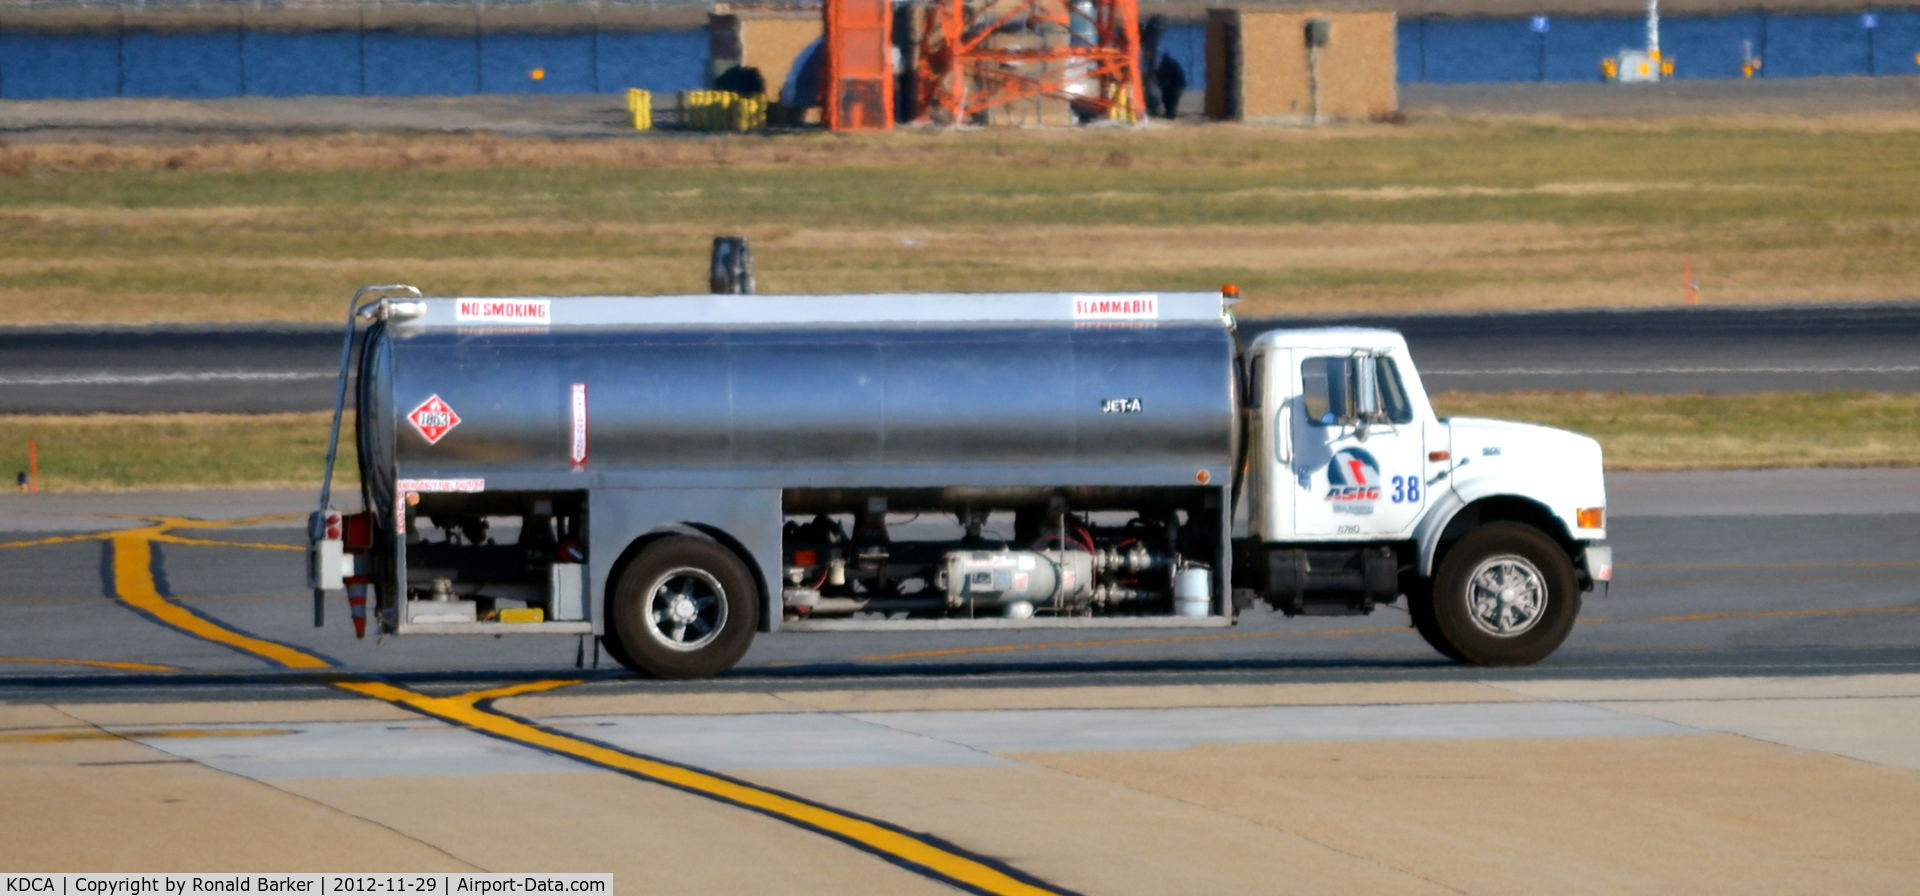 Ronald Reagan Washington National Airport (DCA) - Fuel truck 38